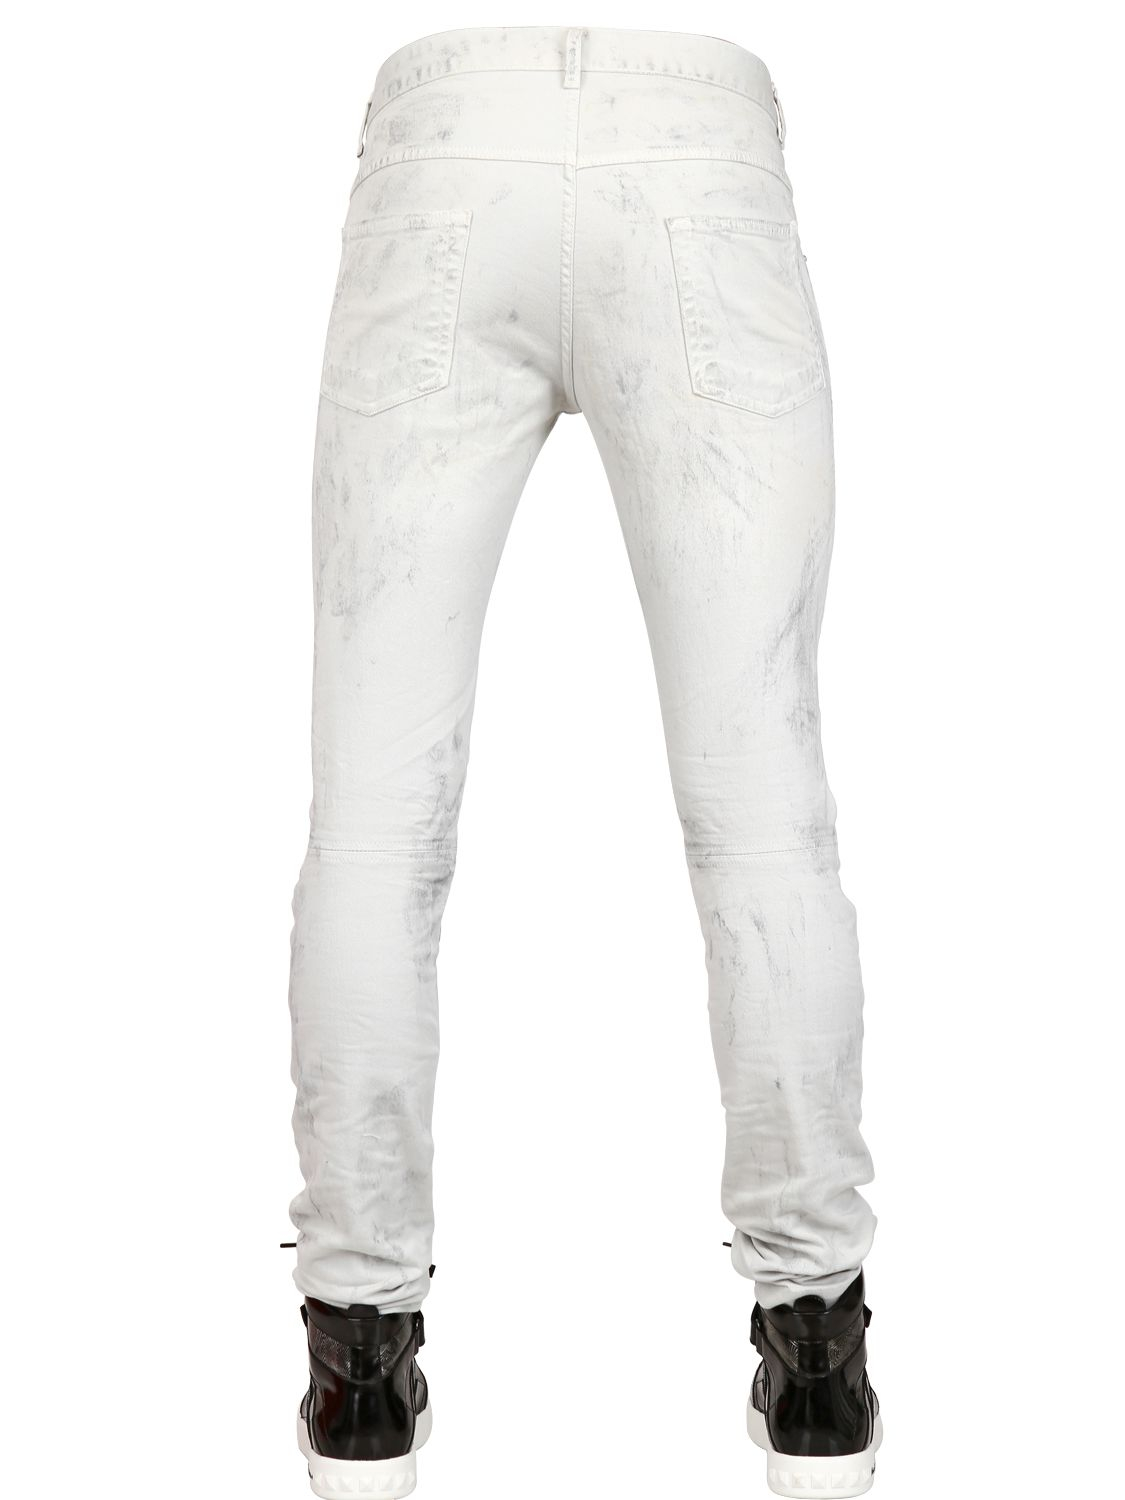 Balmain Stone Washed Denim Biker Jeans in White for Men - Lyst